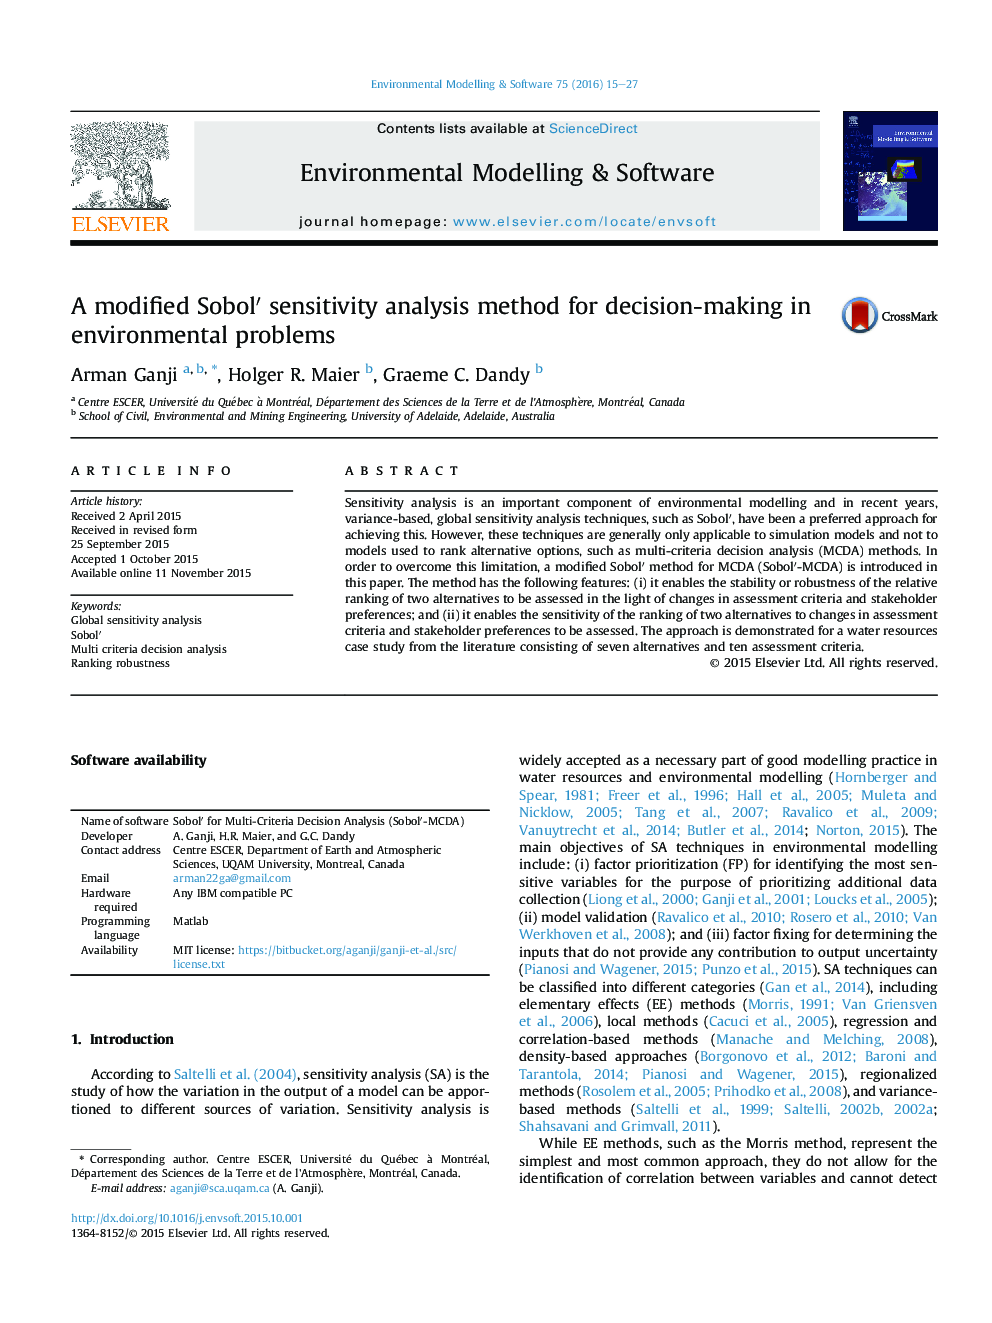 A modified Sobolâ² sensitivity analysis method for decision-making in environmental problems